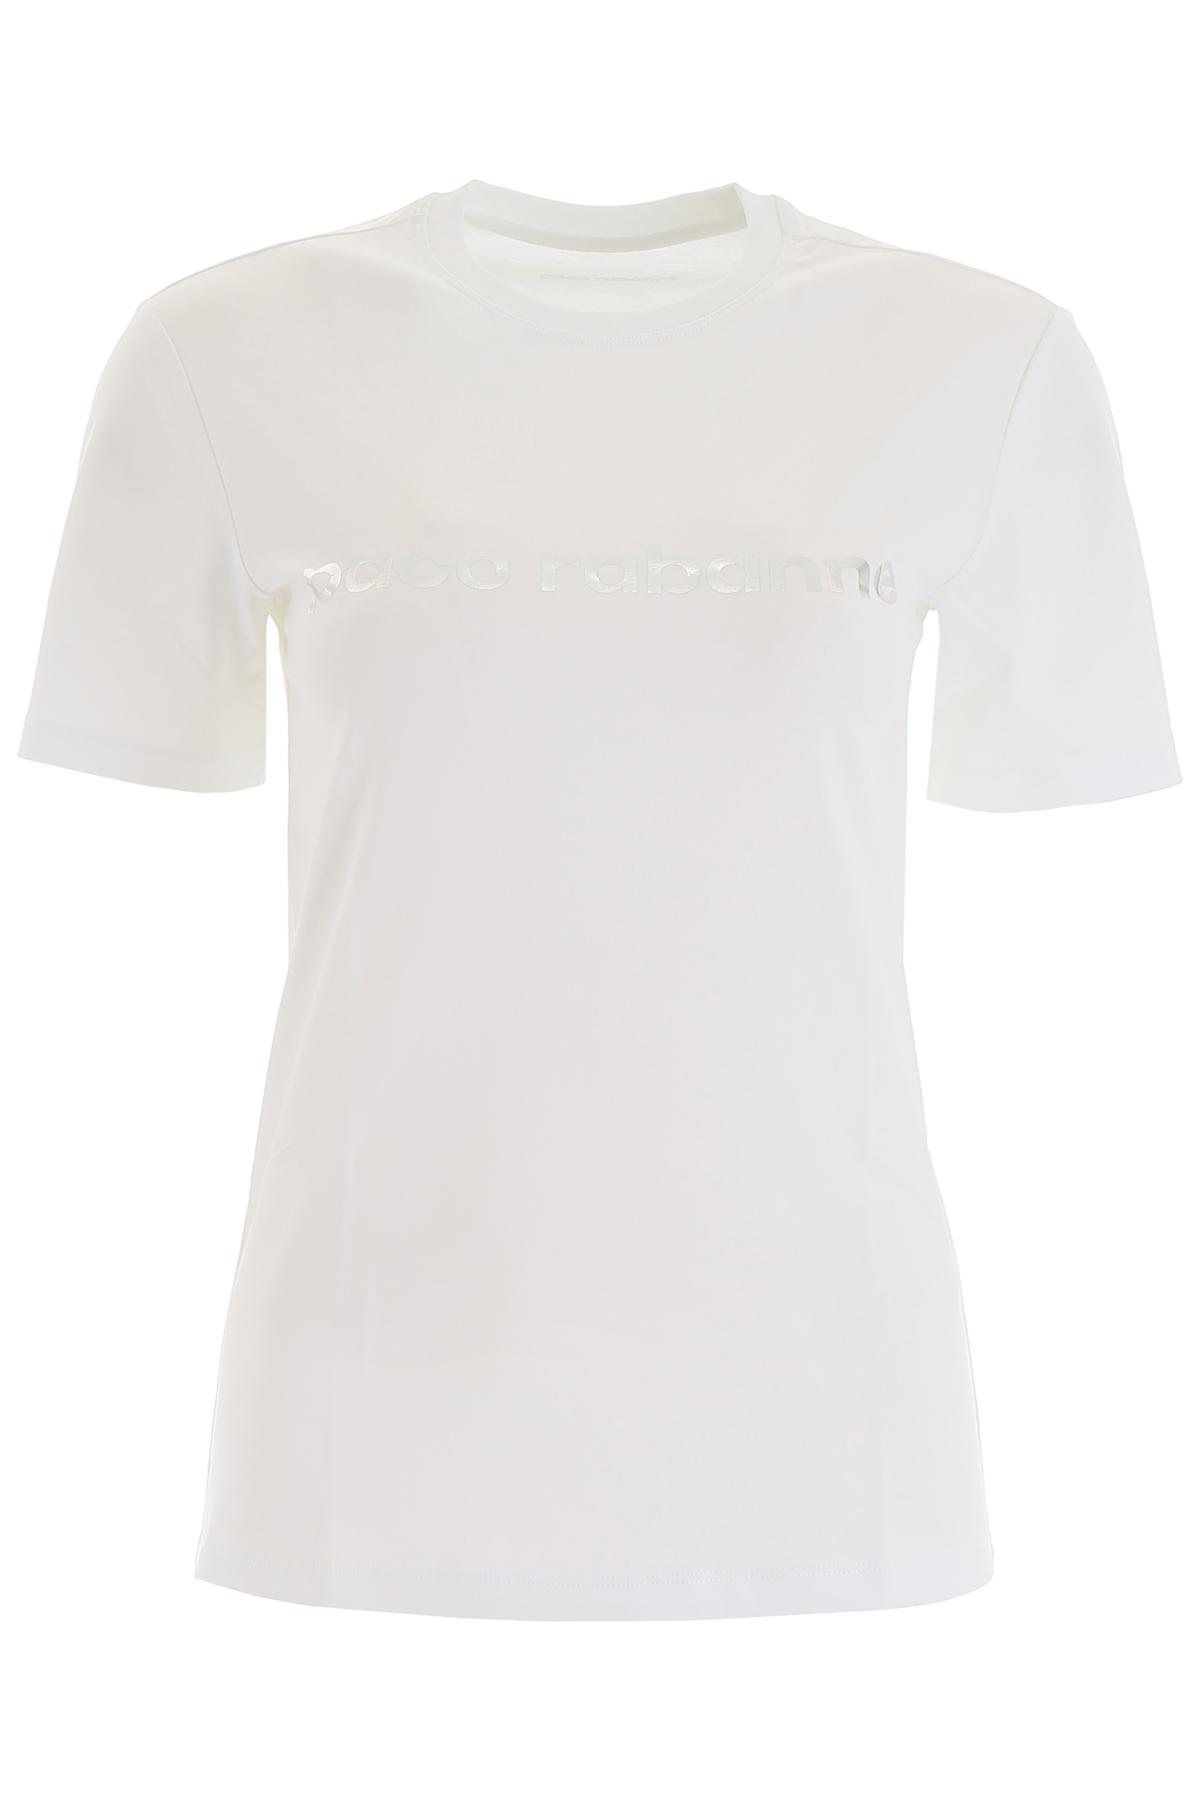 Paco Rabanne Cotton Logo T-shirt in White,Silver (White) - Lyst